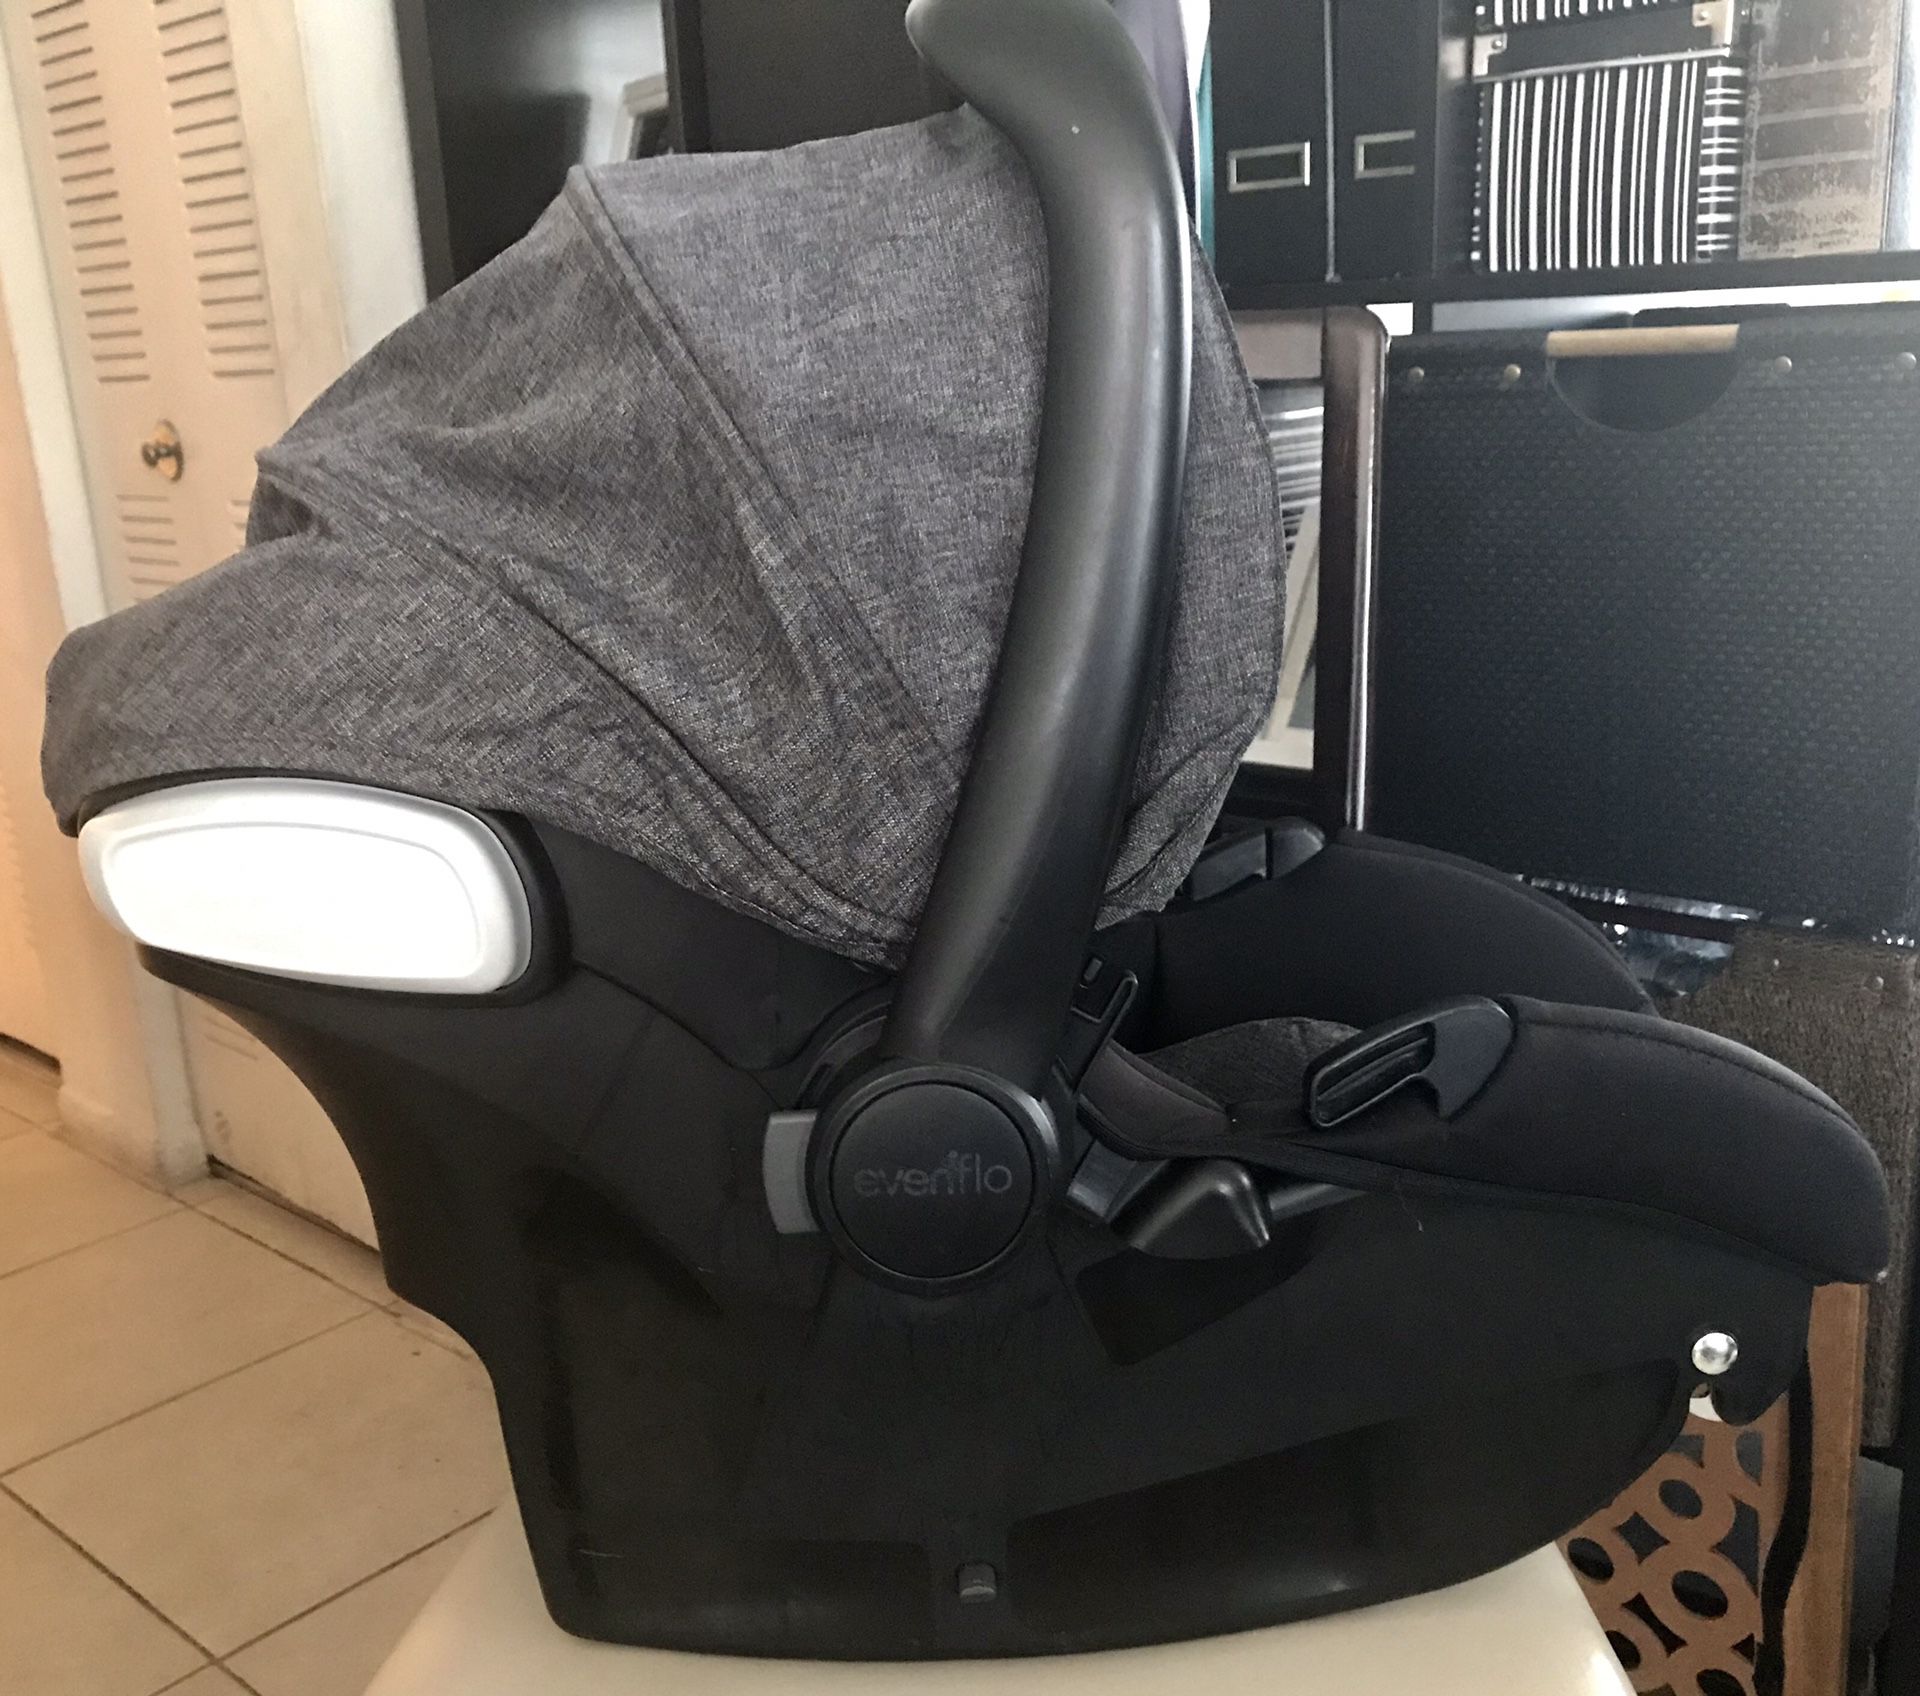 Evenflo LiteMax Infant Car Seat - color: Meteorite **** CAR SEAT ONLY, NO BASE****